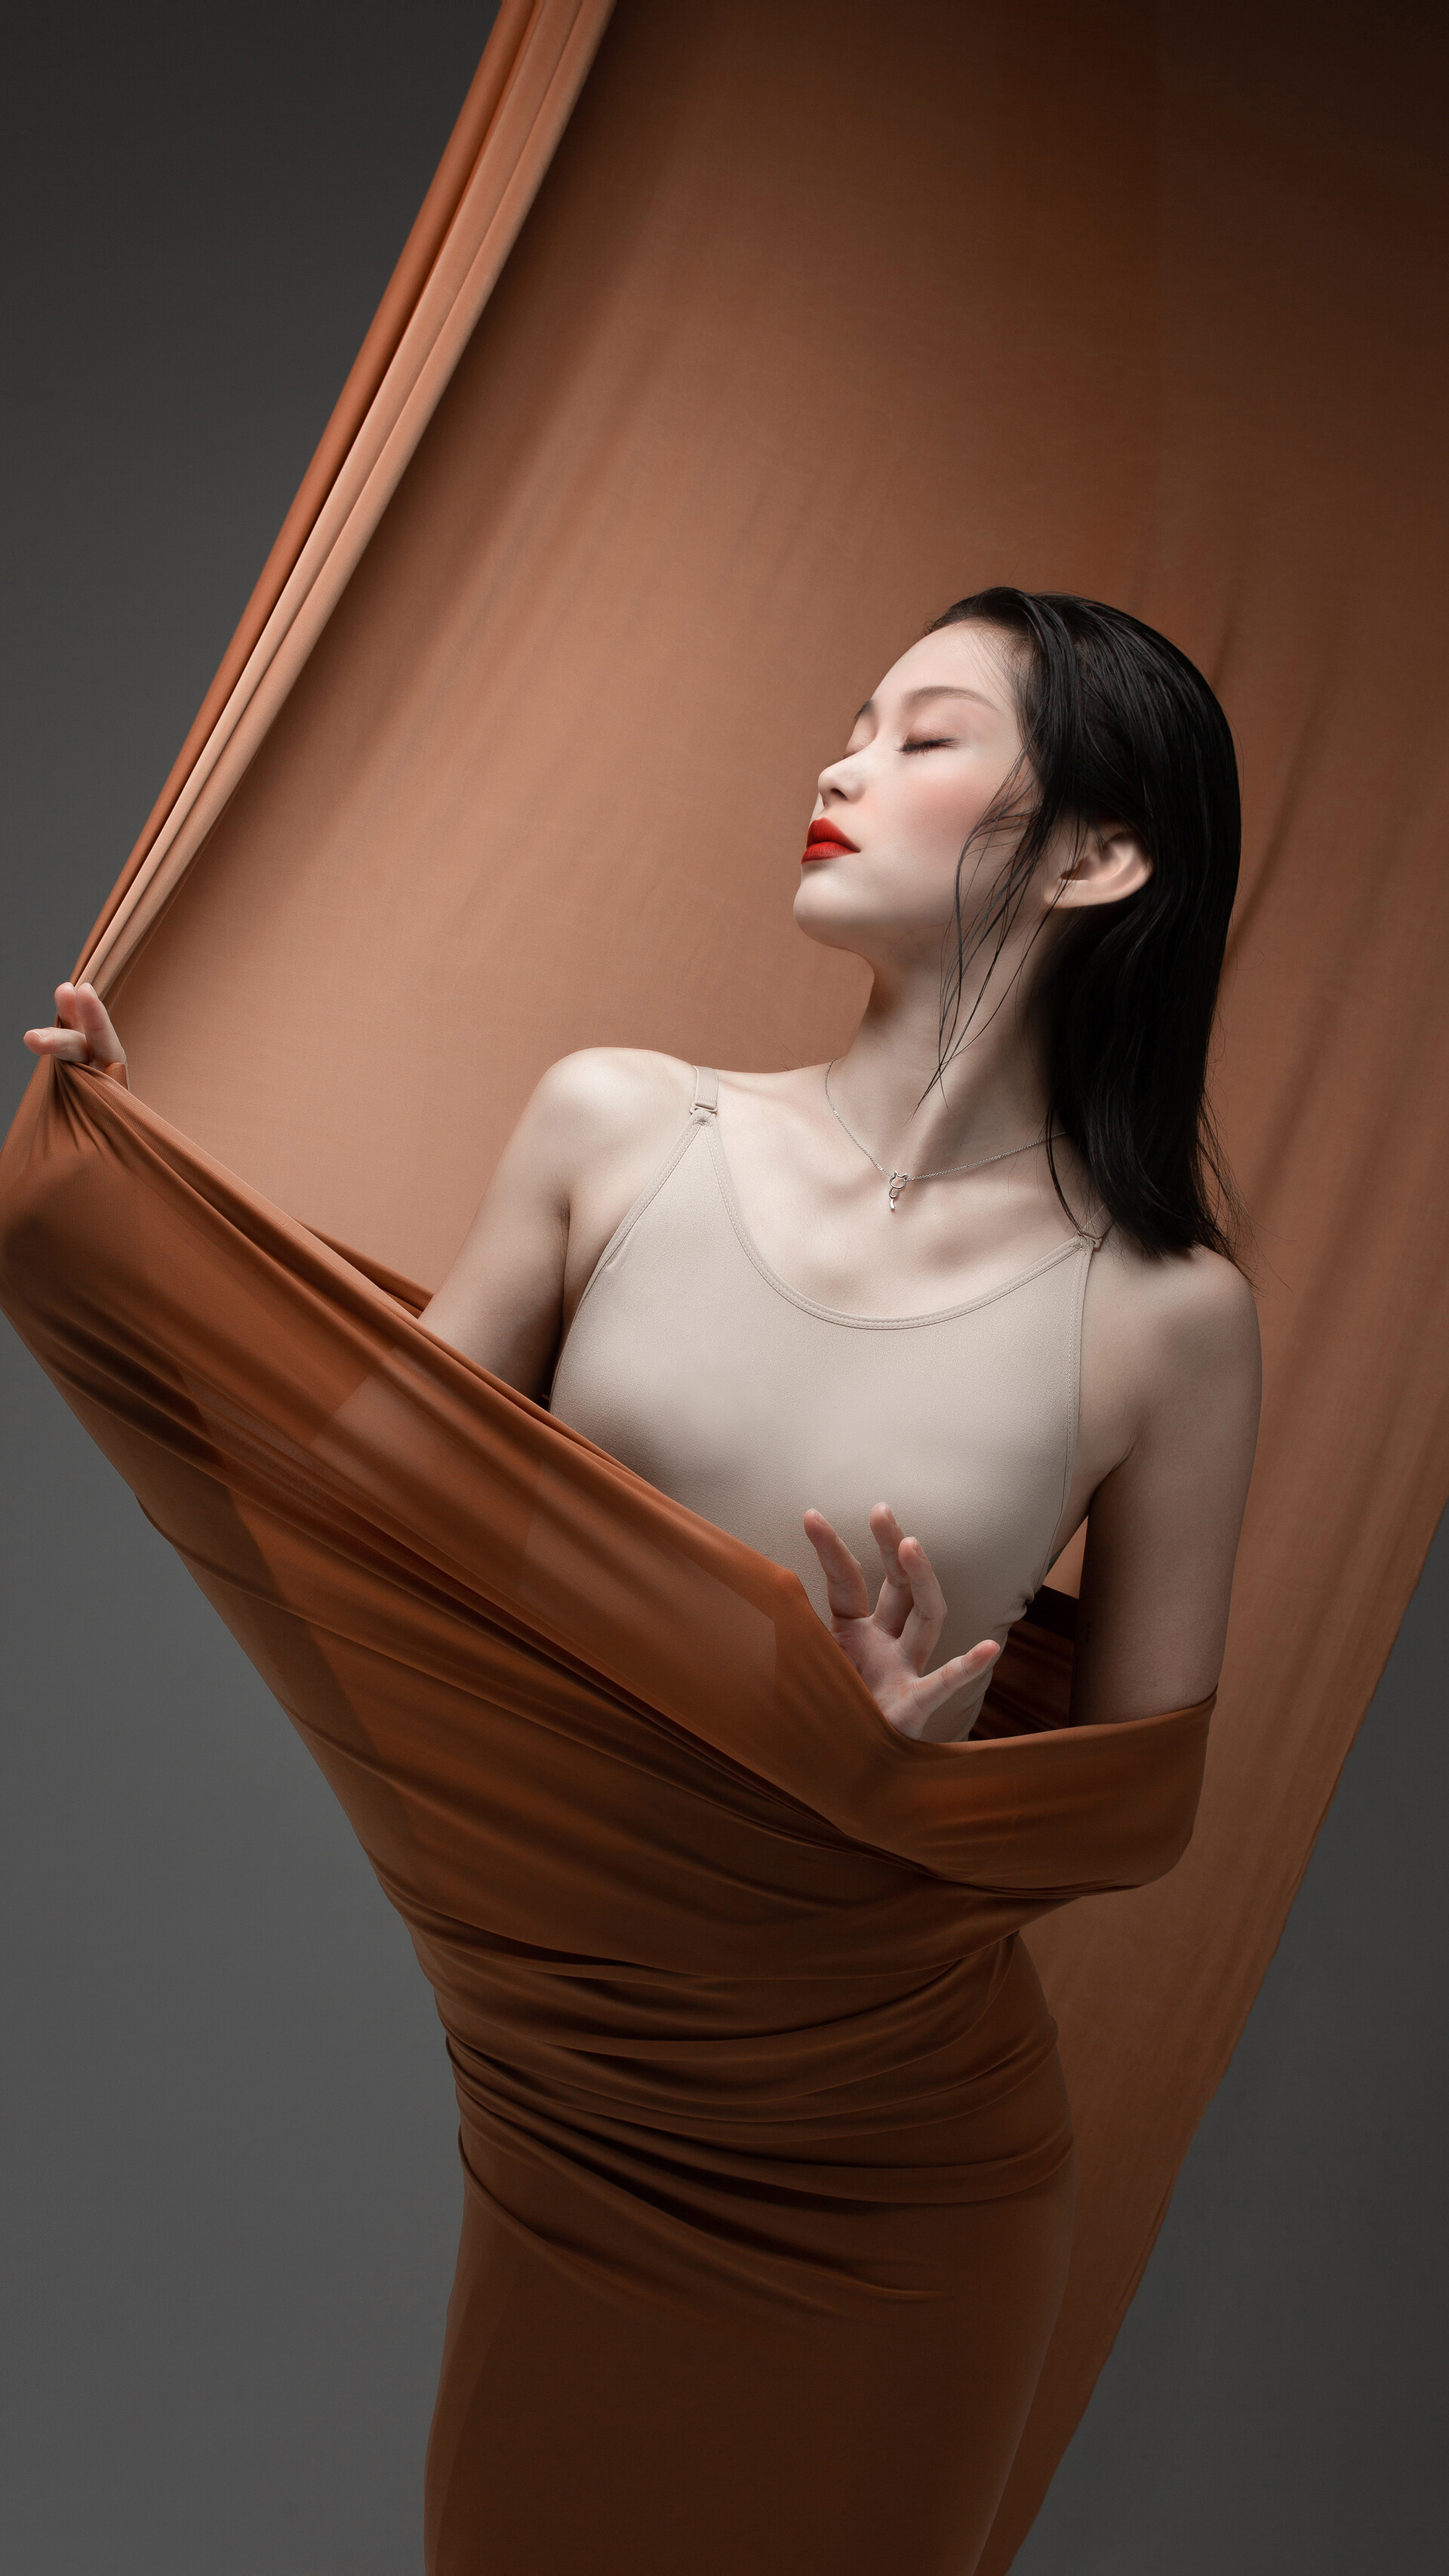 Asian Simple Background Dark Hair Portrait Display Women Digital Art Artwork CGi 3D Closed Eyes Vert 1920x3413